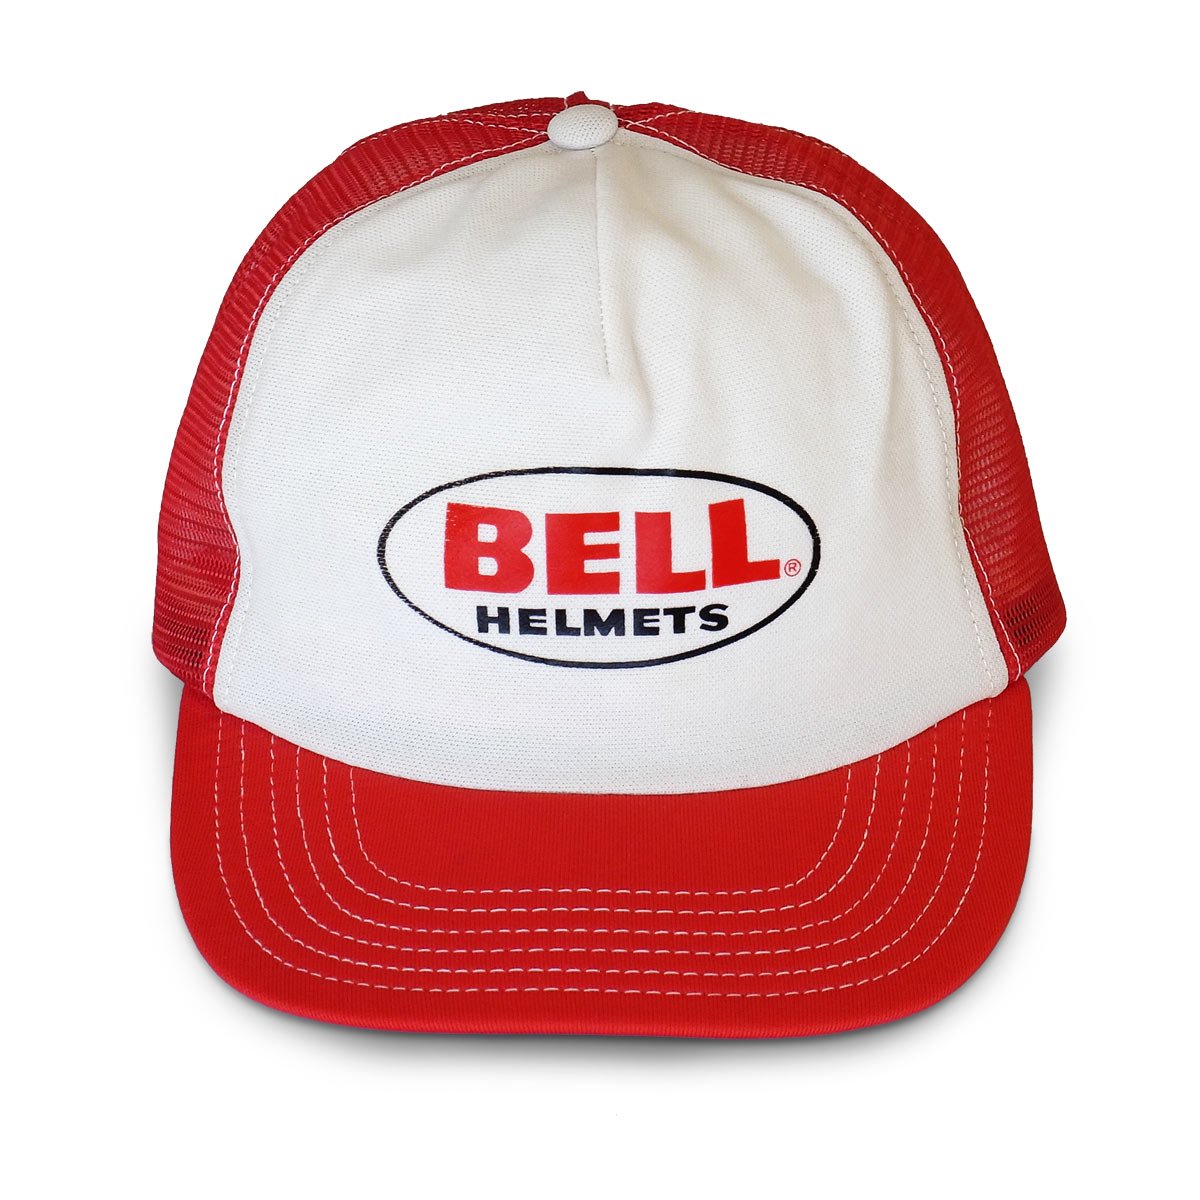 Bell Helmets/Trucker Mesh Capベル メッシュキャップ